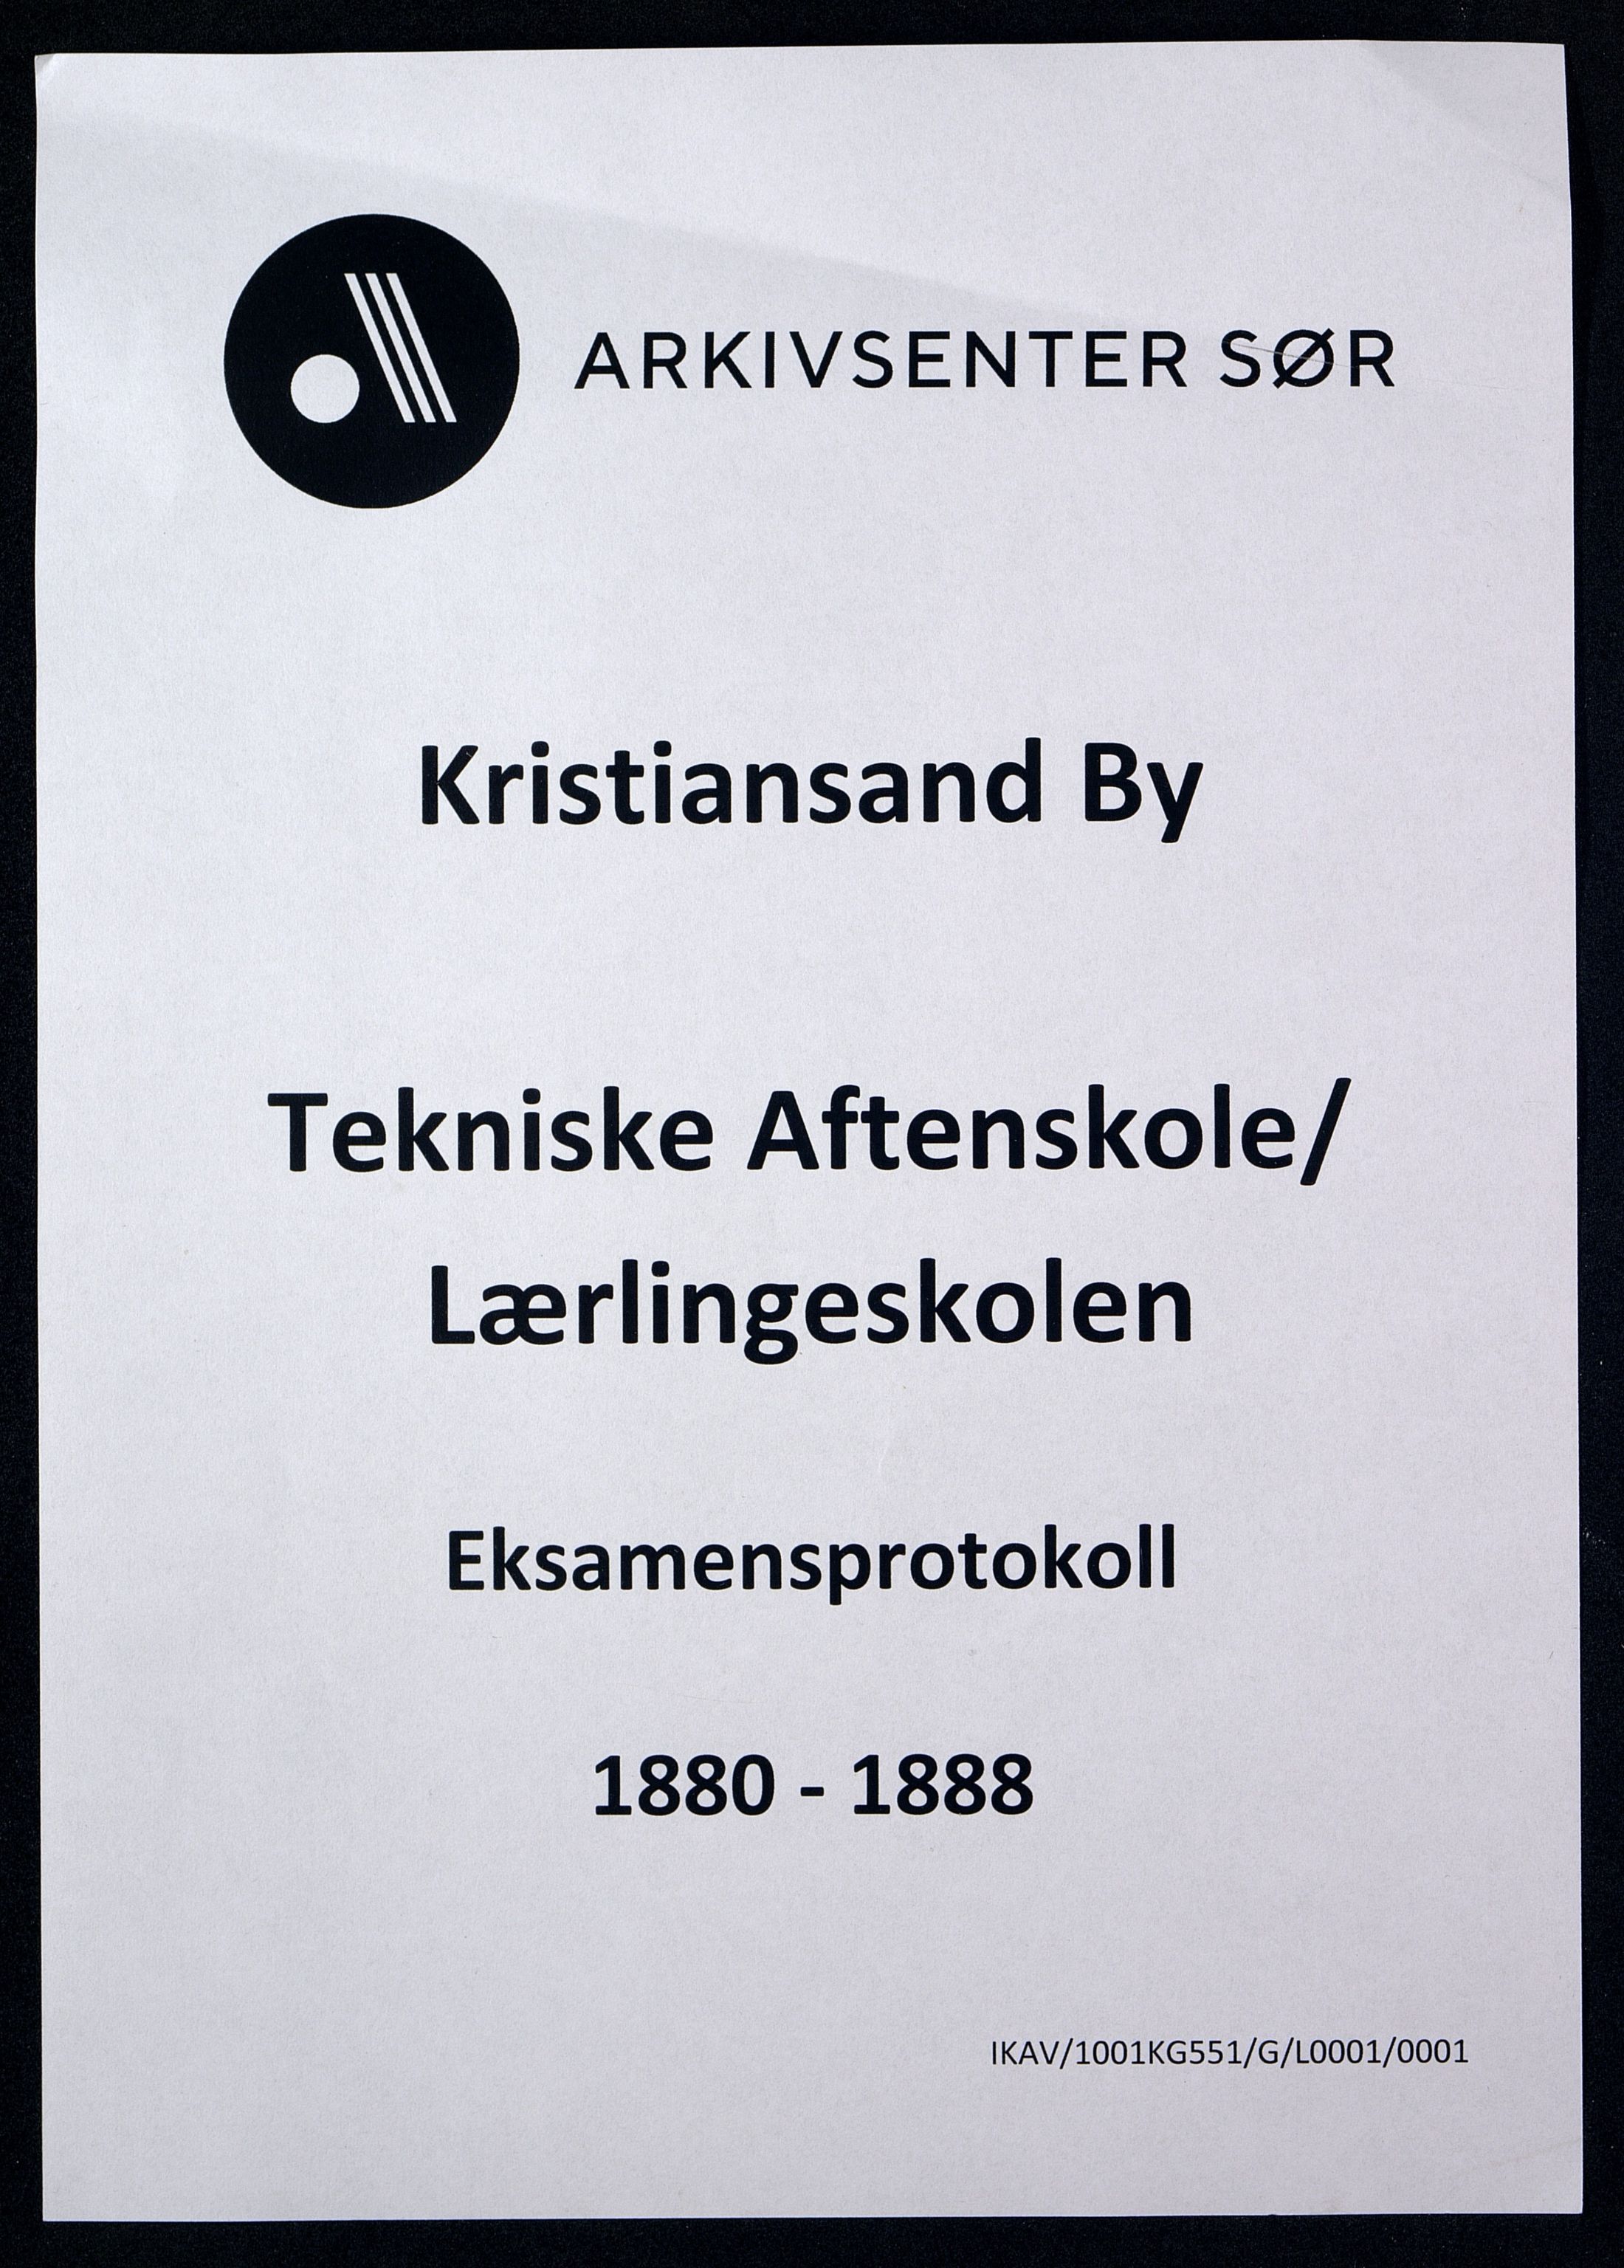 Kristiansand By - Kristiansand Tekniske Aftenskole/Lærlingeskolen, IKAV/1001KG551/G/L0001/0001: Eksamensprotokoller / Eksamensprotokoll, 1880-1888